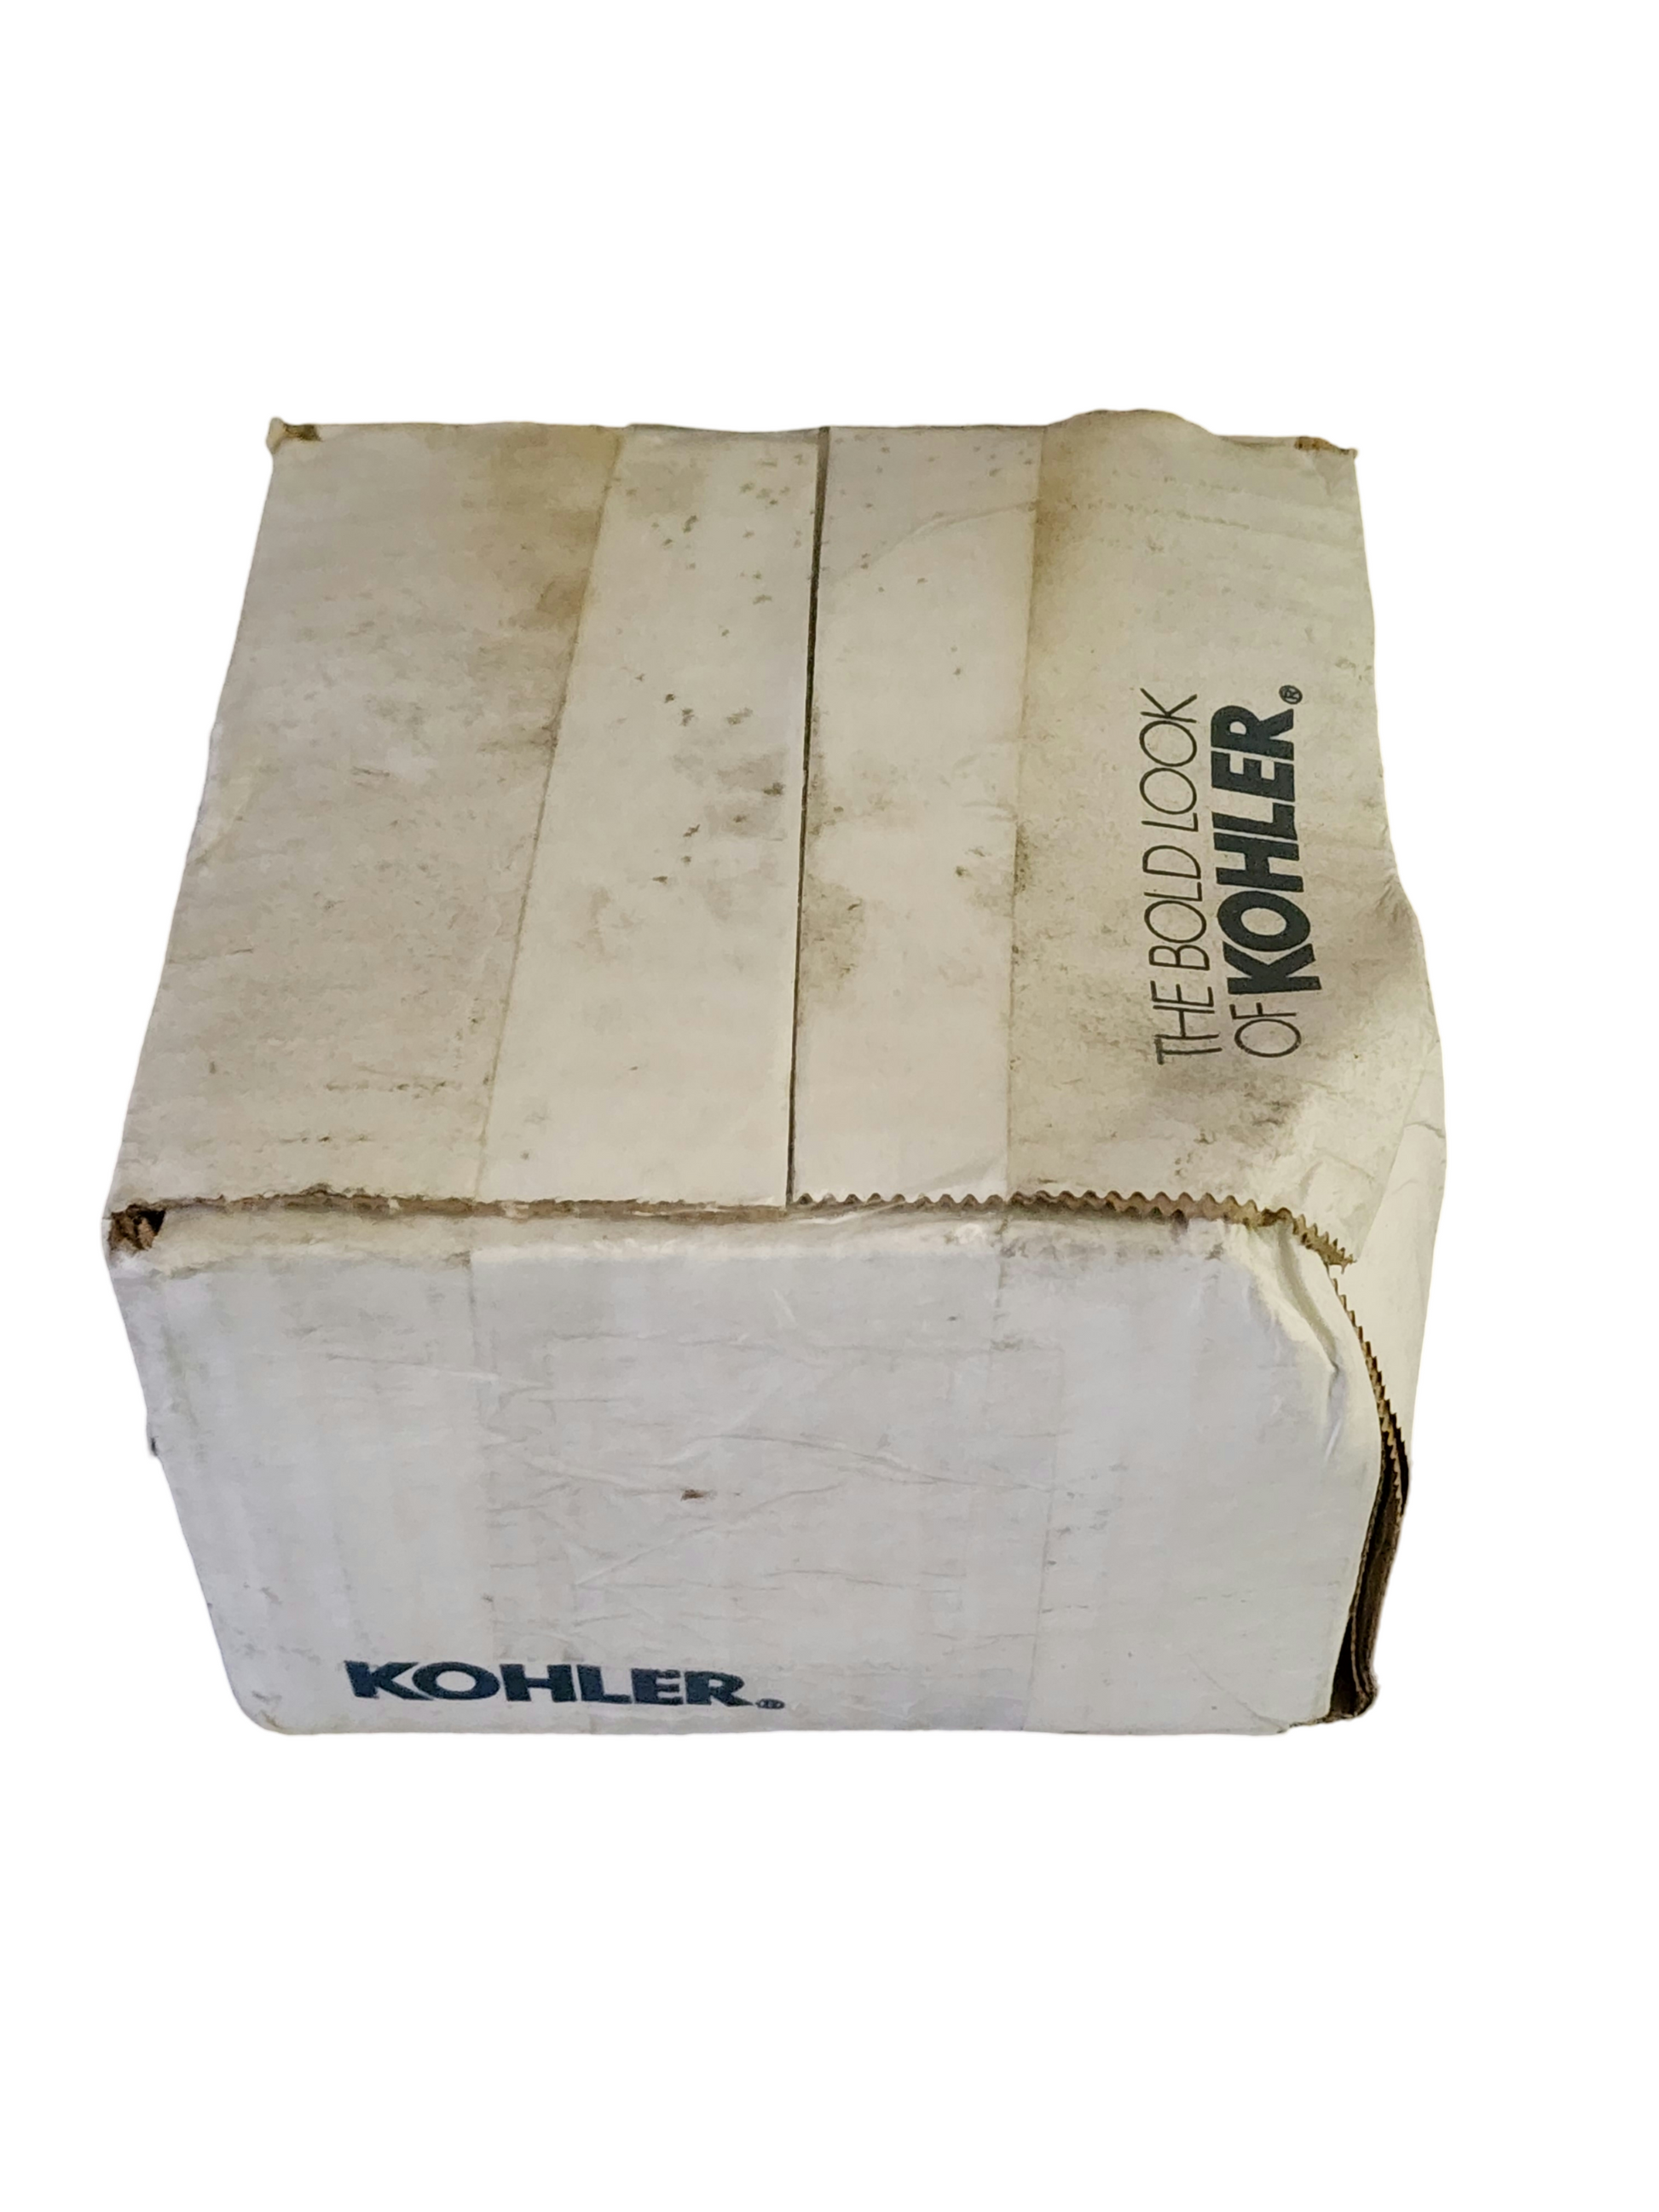 Transform your showering experience with the Kohler K-975 Purist/Stillness Adjustable Wall-Mount Handshower Bracket